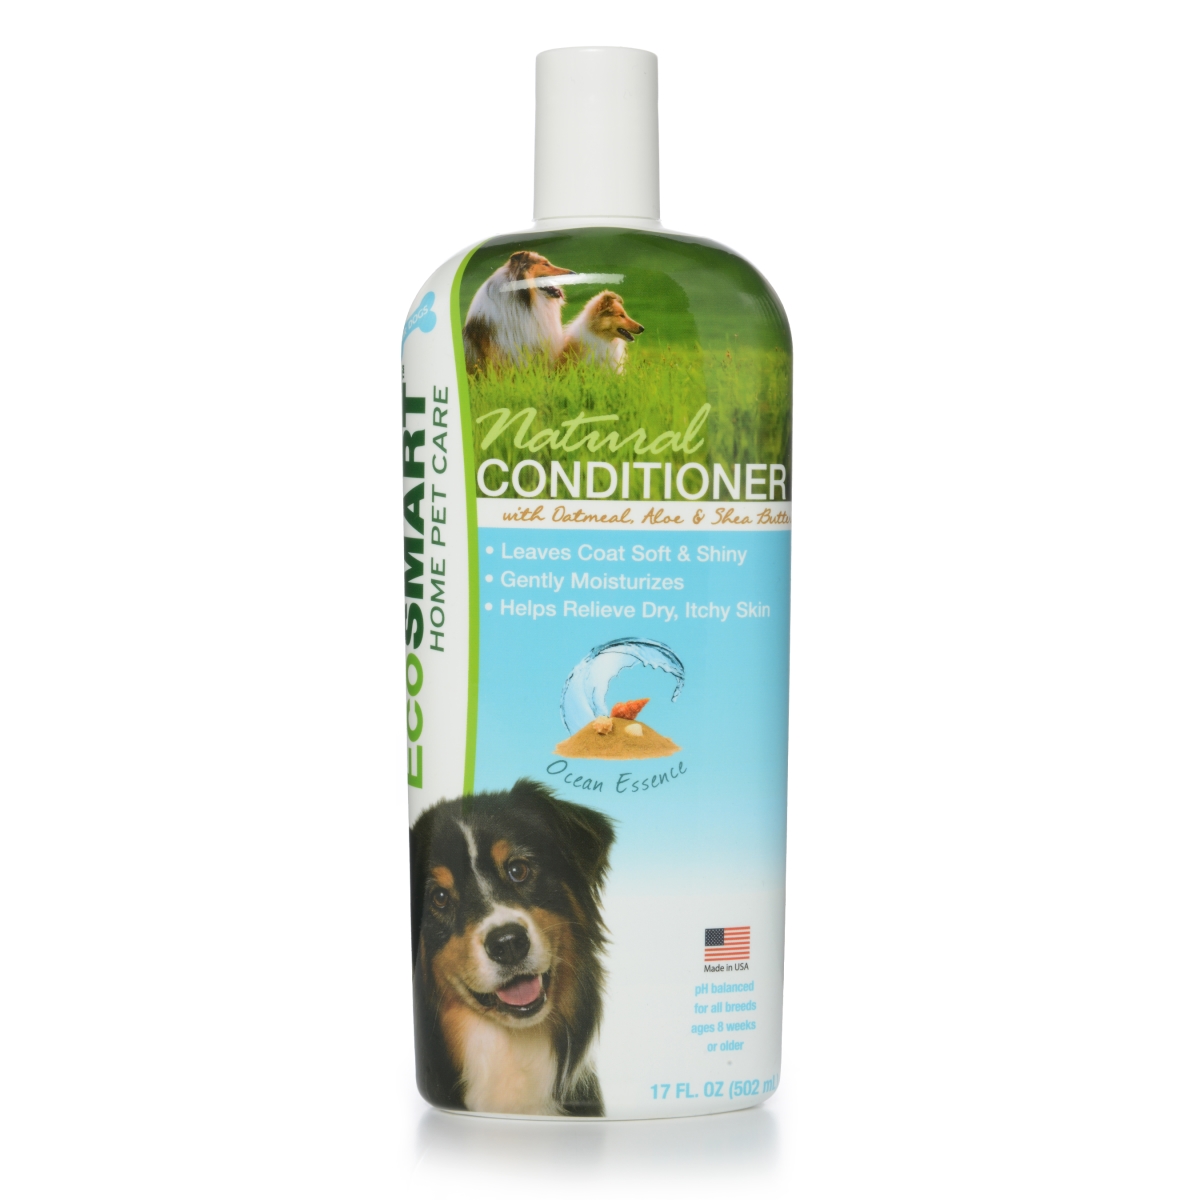 Ecsm-33265-06 17 Oz Natural Dog Conditioner, Ocean Essence - Pack Of 6